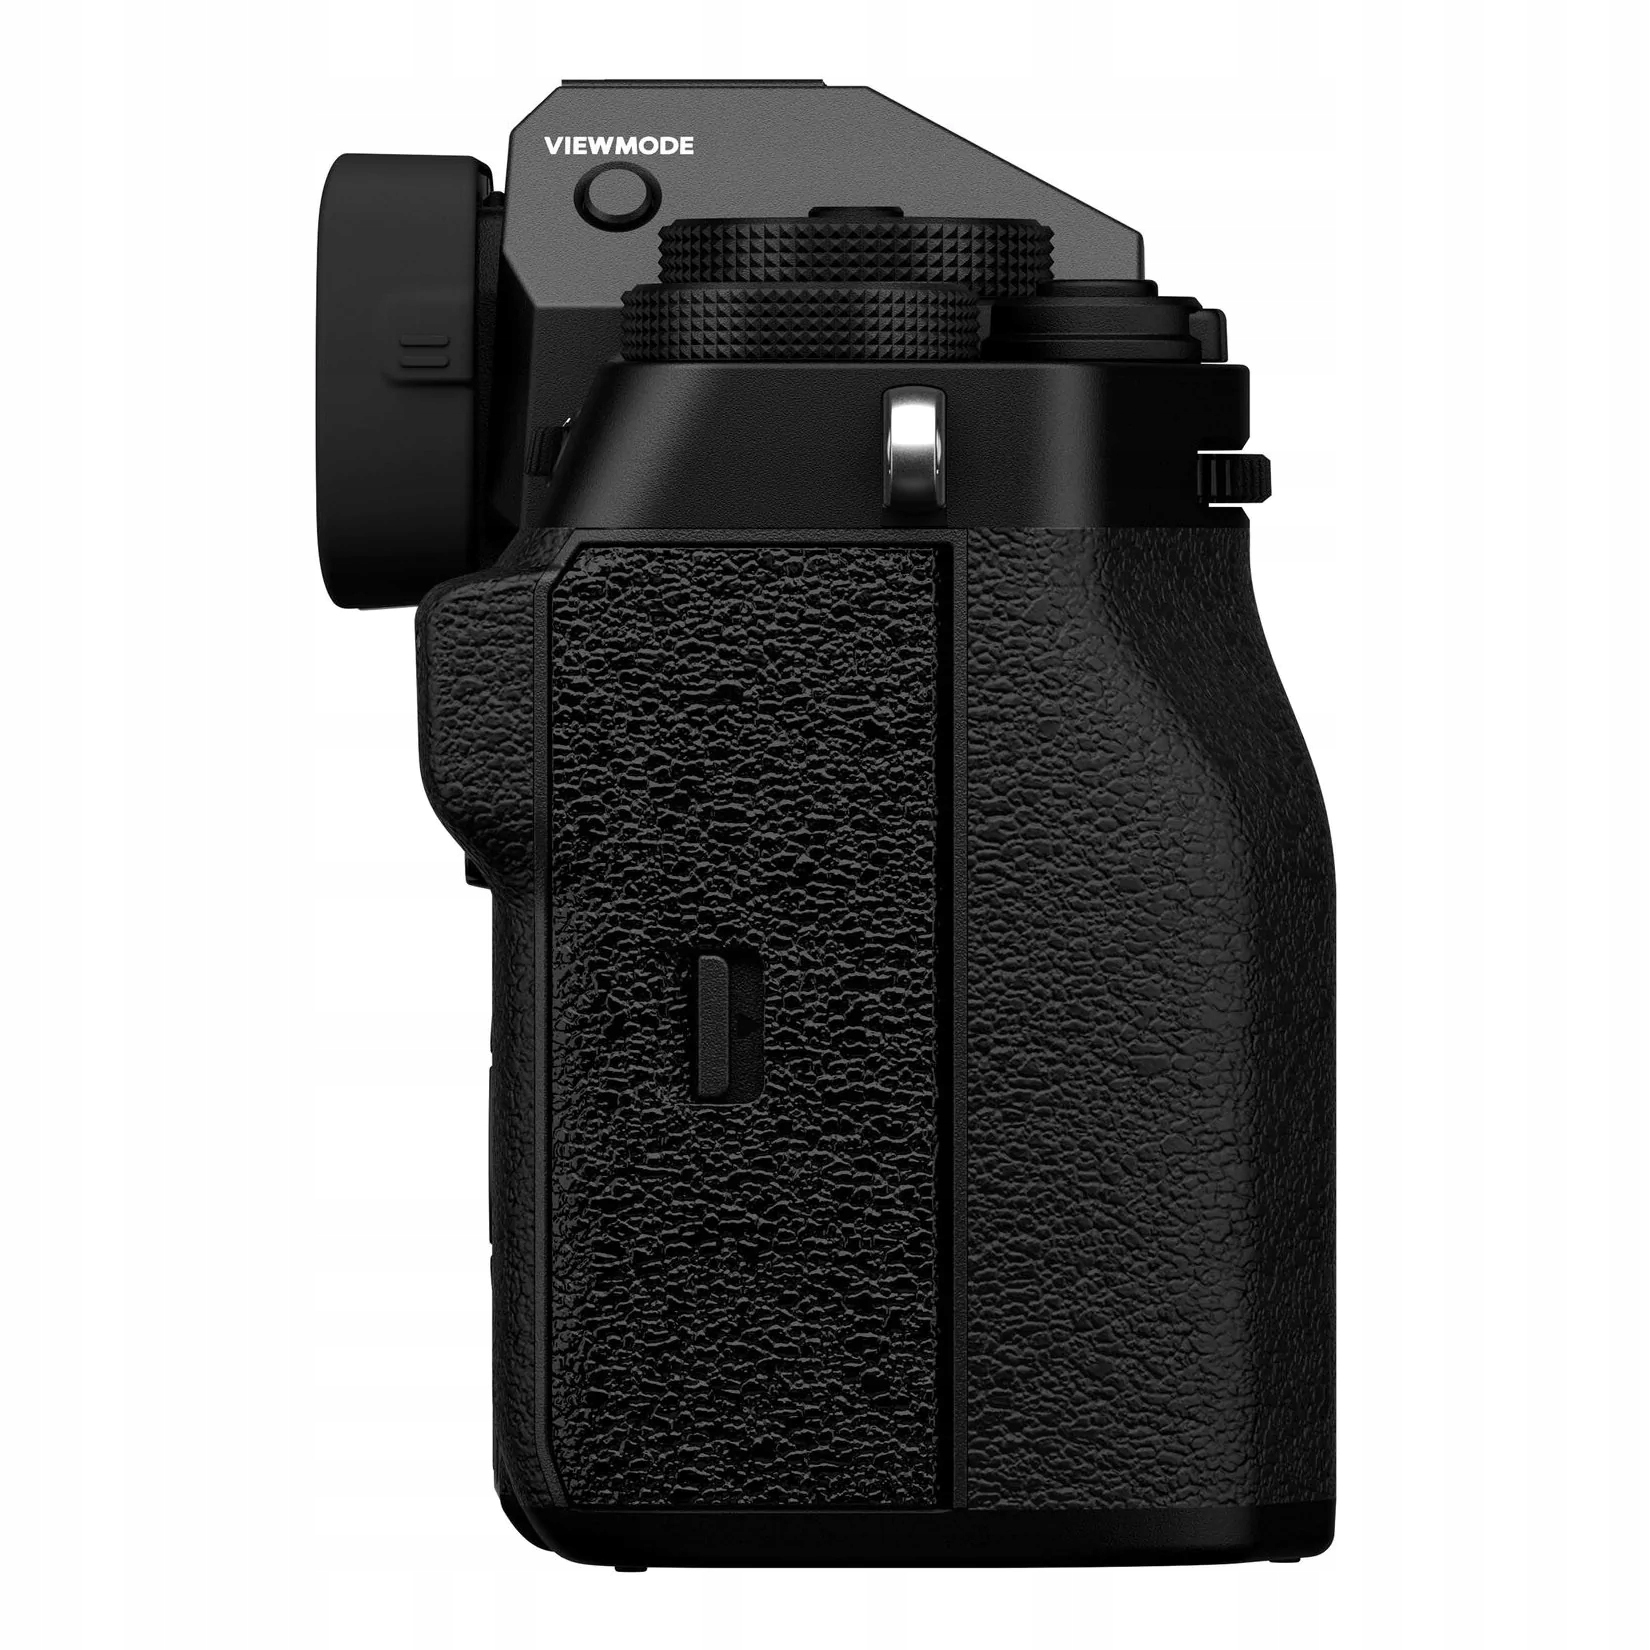 Fujifilm X-T5 + 16-80/4 R OIS WR black Sensor Size APS-C